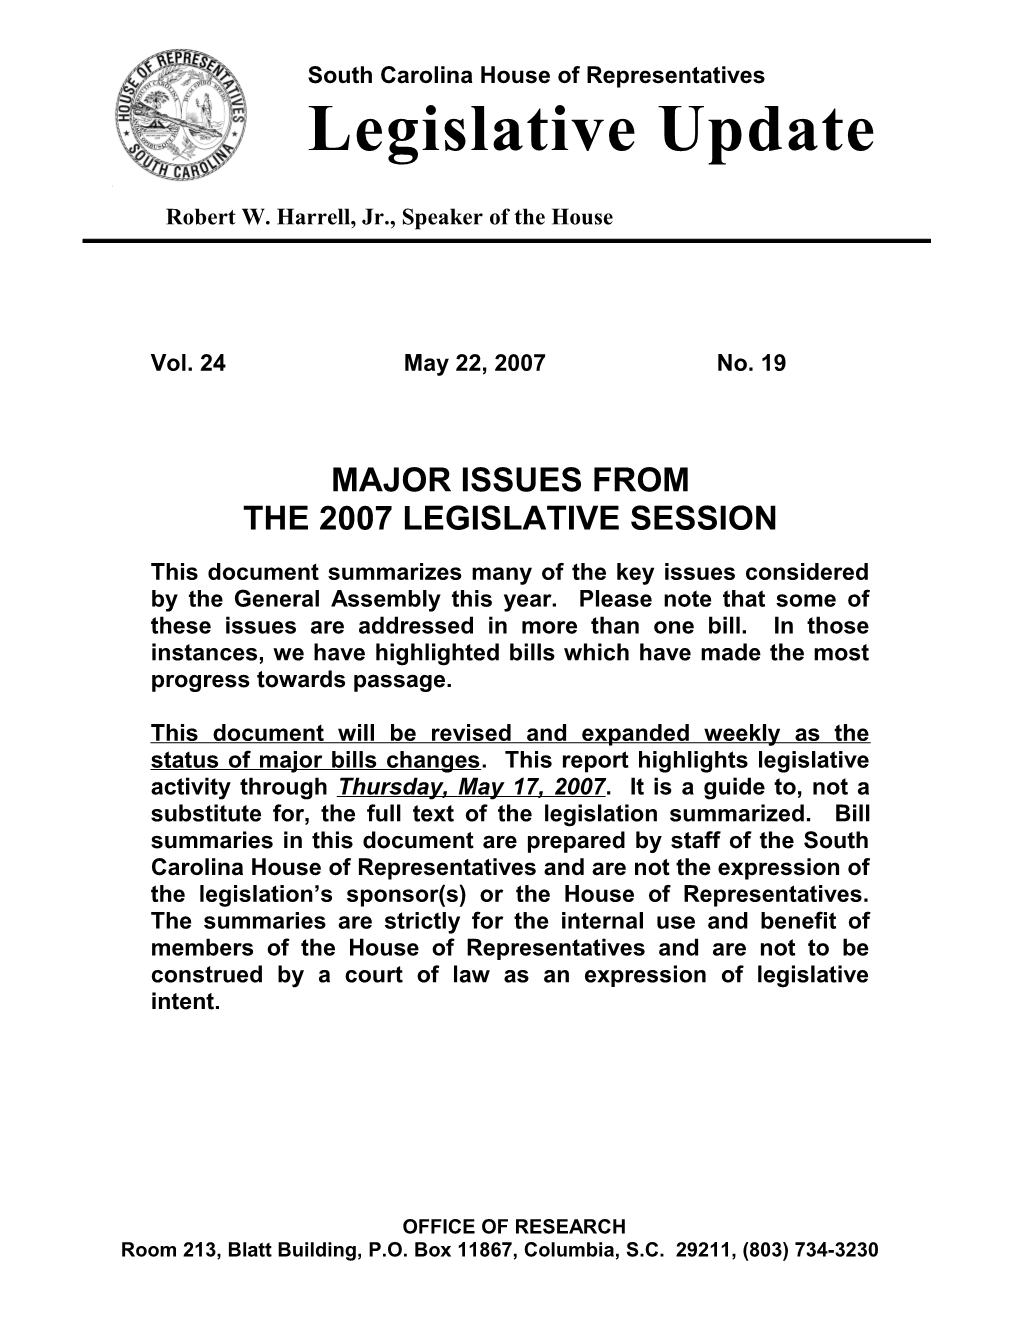 Legislative Update - Vol. 24 No. 19 May 22, 2007 - South Carolina Legislature Online